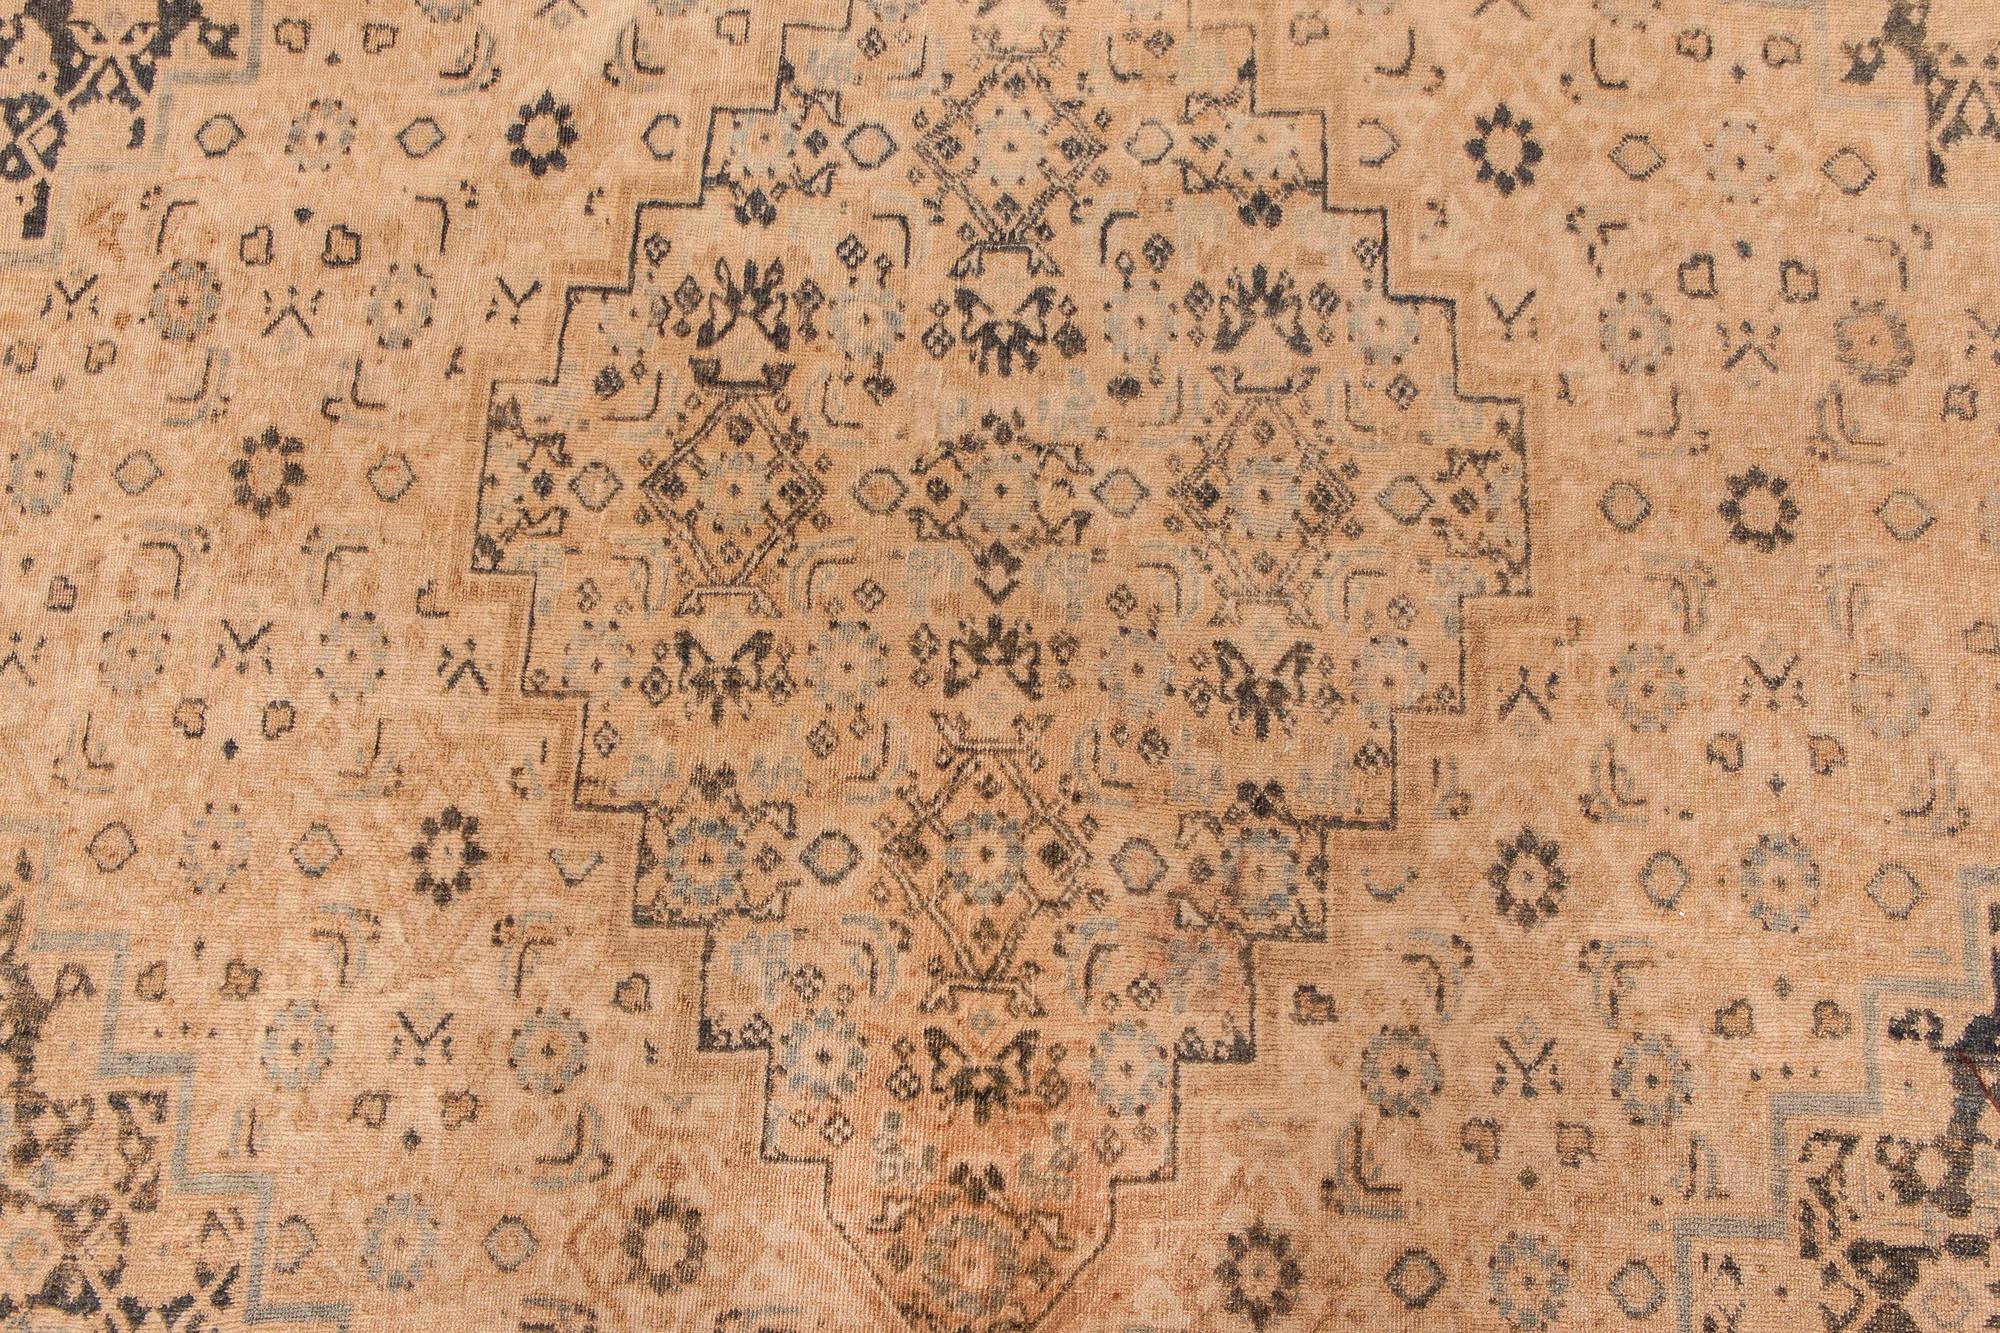 Antique Persian Tabriz handwoven wool carpet
Size: 14'4